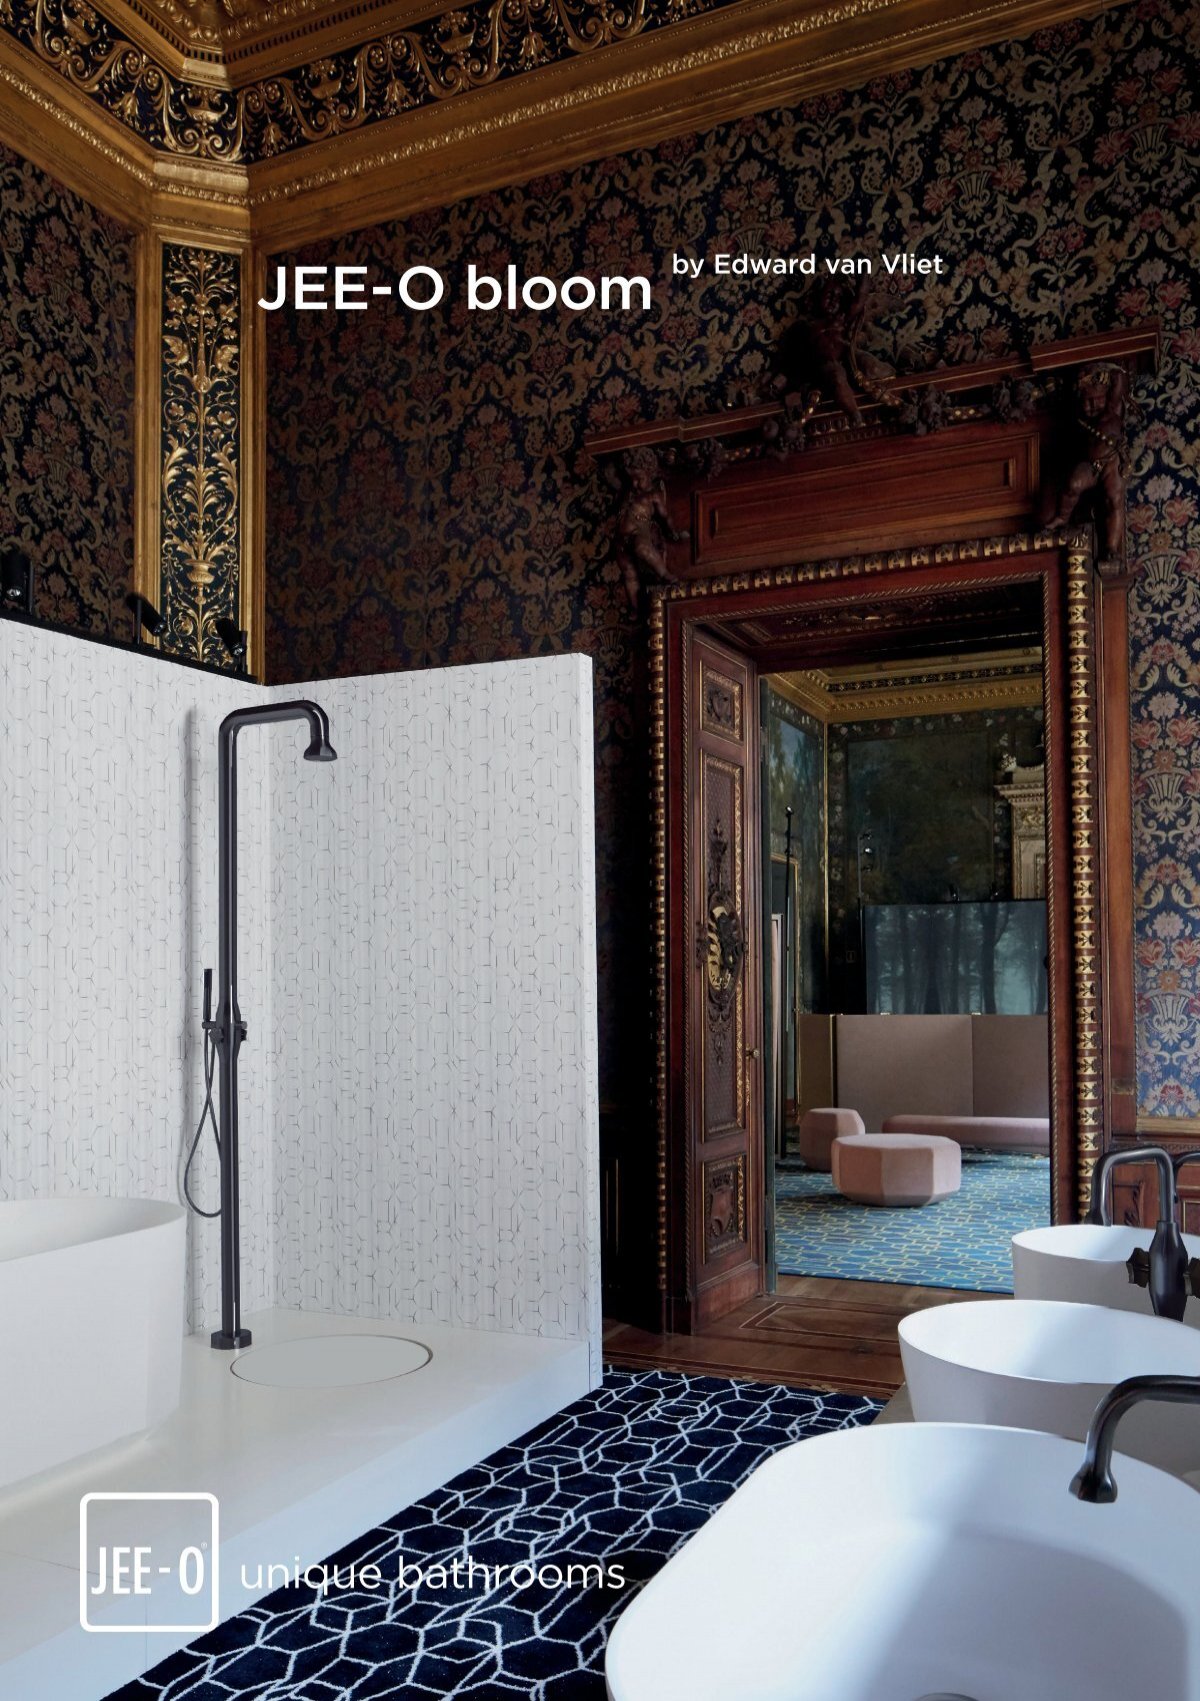 JEE-O bloom wall basin mixer - JEE-O product